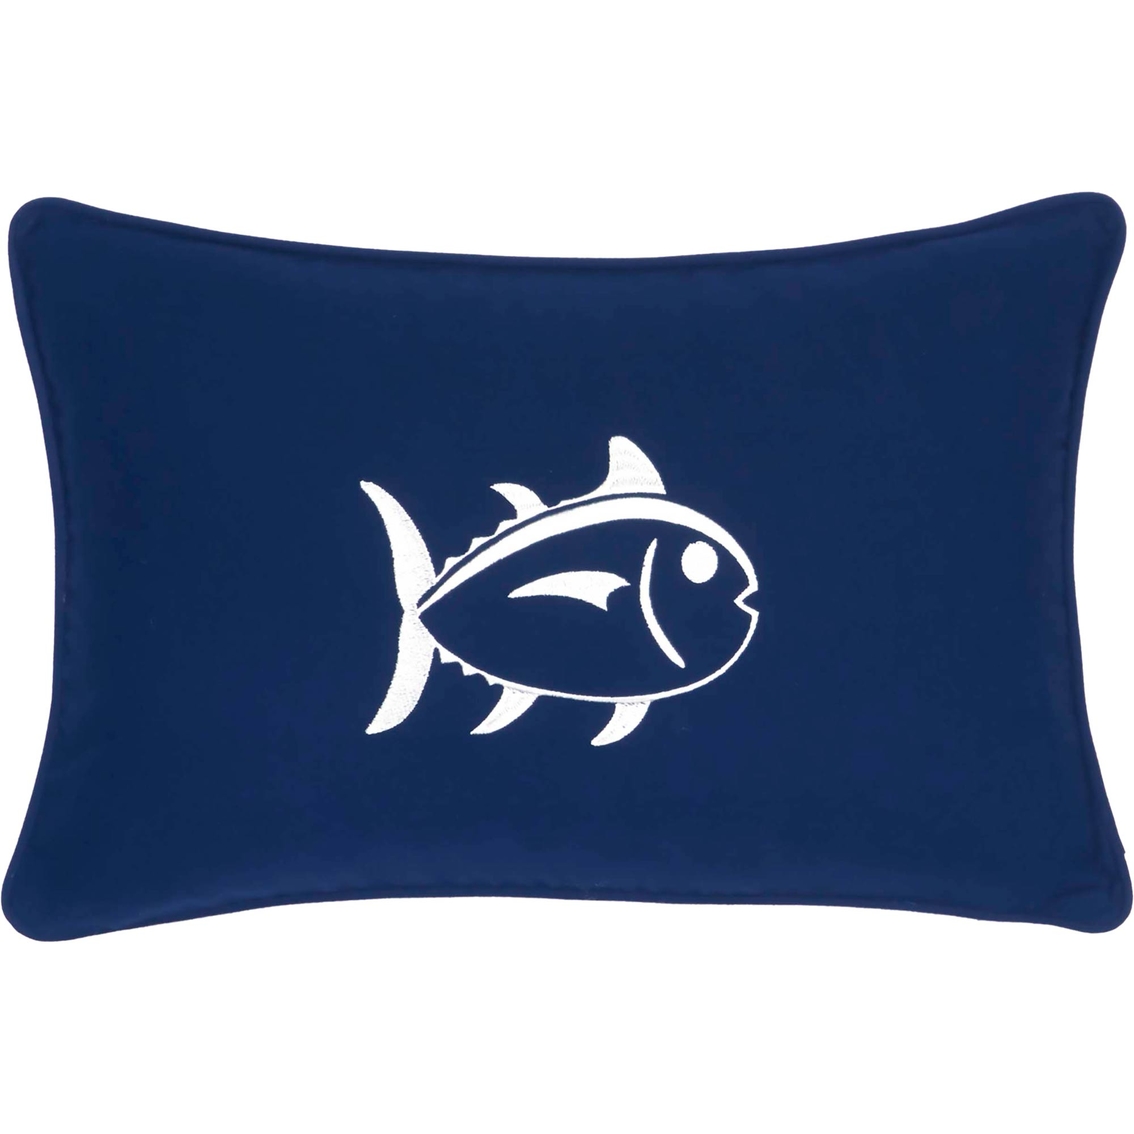 SOUTHERN TIDE Dover Beach Decorative Pillow Blue 18 W x 18 L 